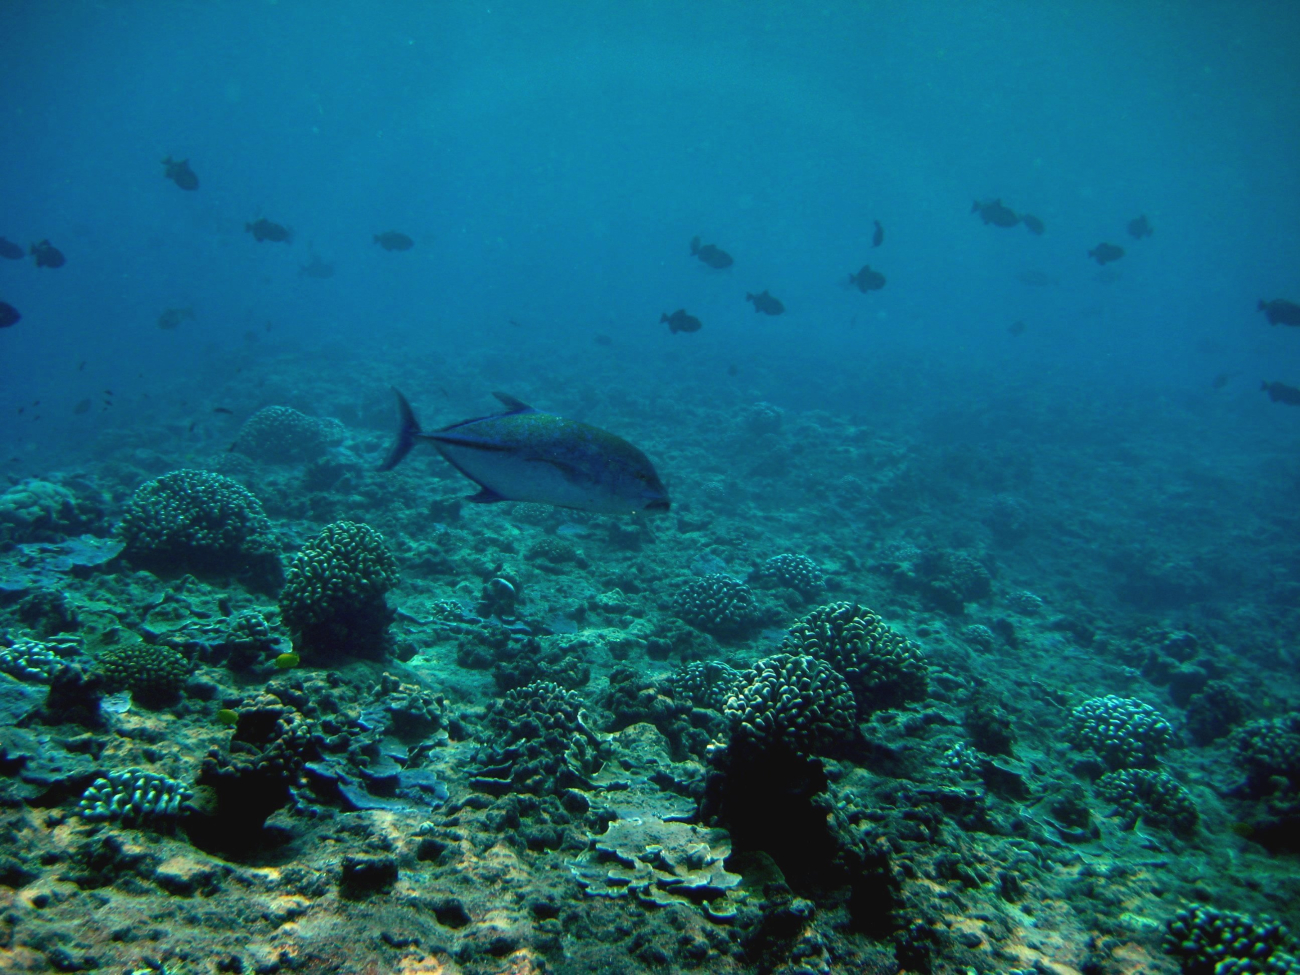 Bluefin trevally (Caranx melampygus) over reef